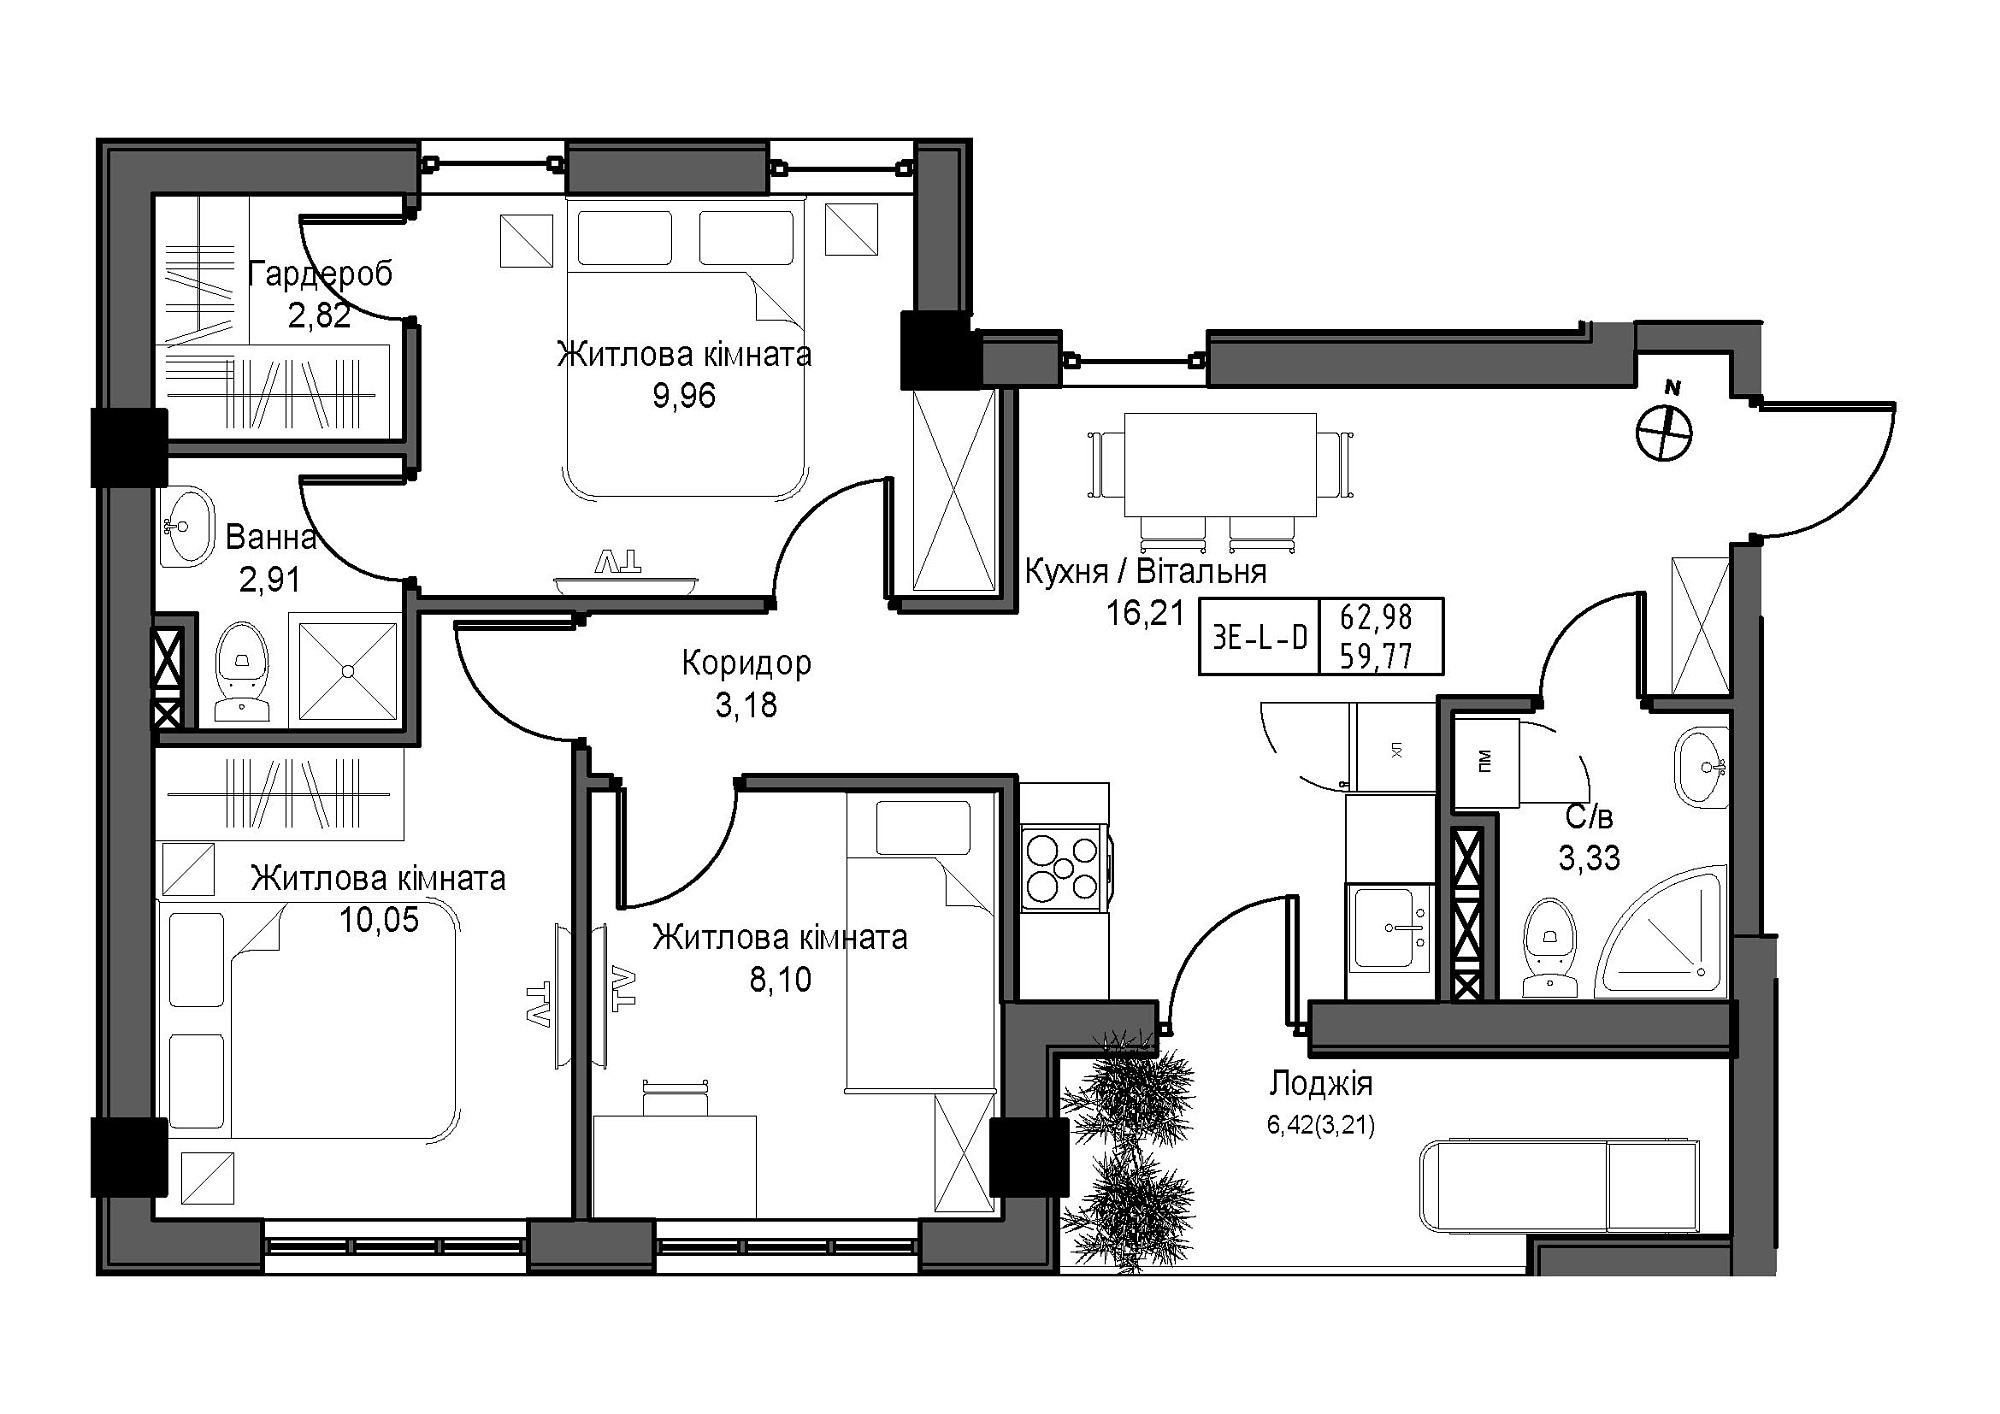 Планування 3-к квартира площею 59.77м2, UM-007-05/0012.